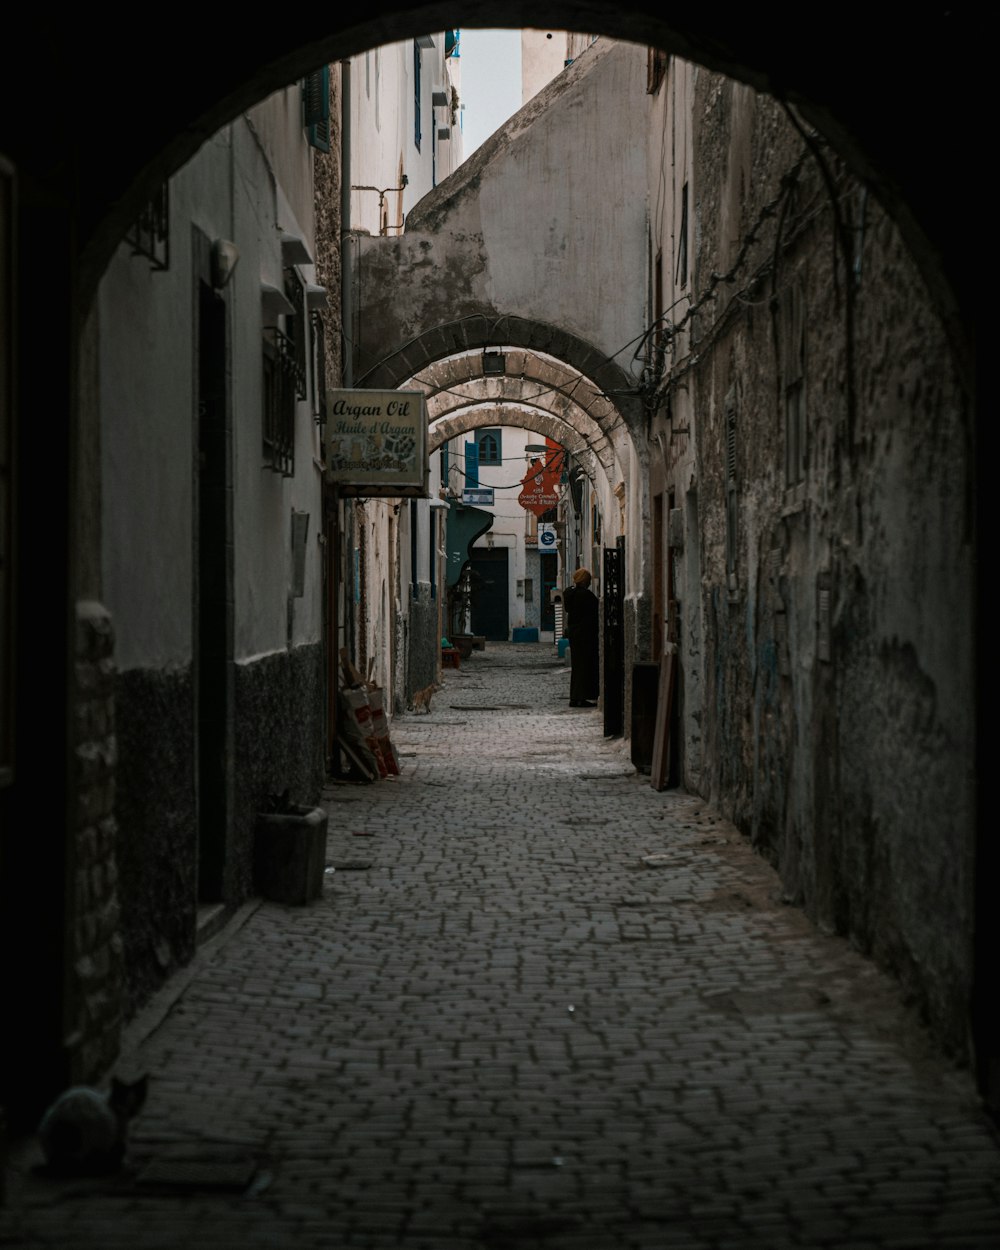 a narrow alley way with a brick walkway